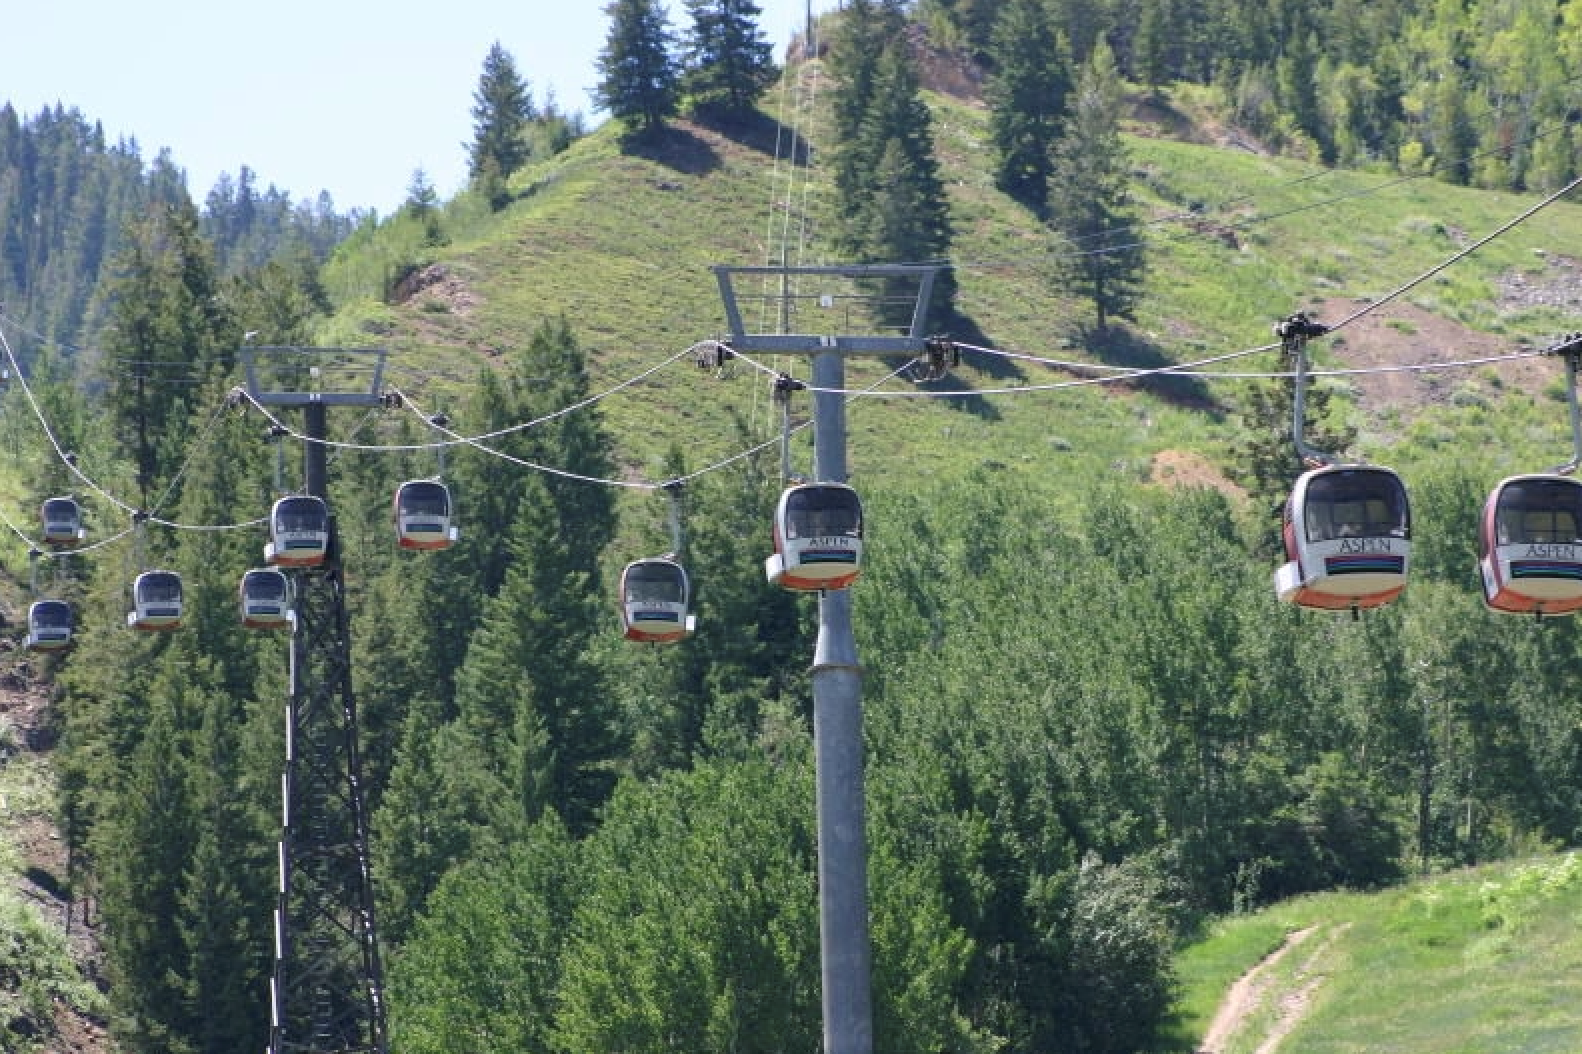 gondolas moving up mountain side